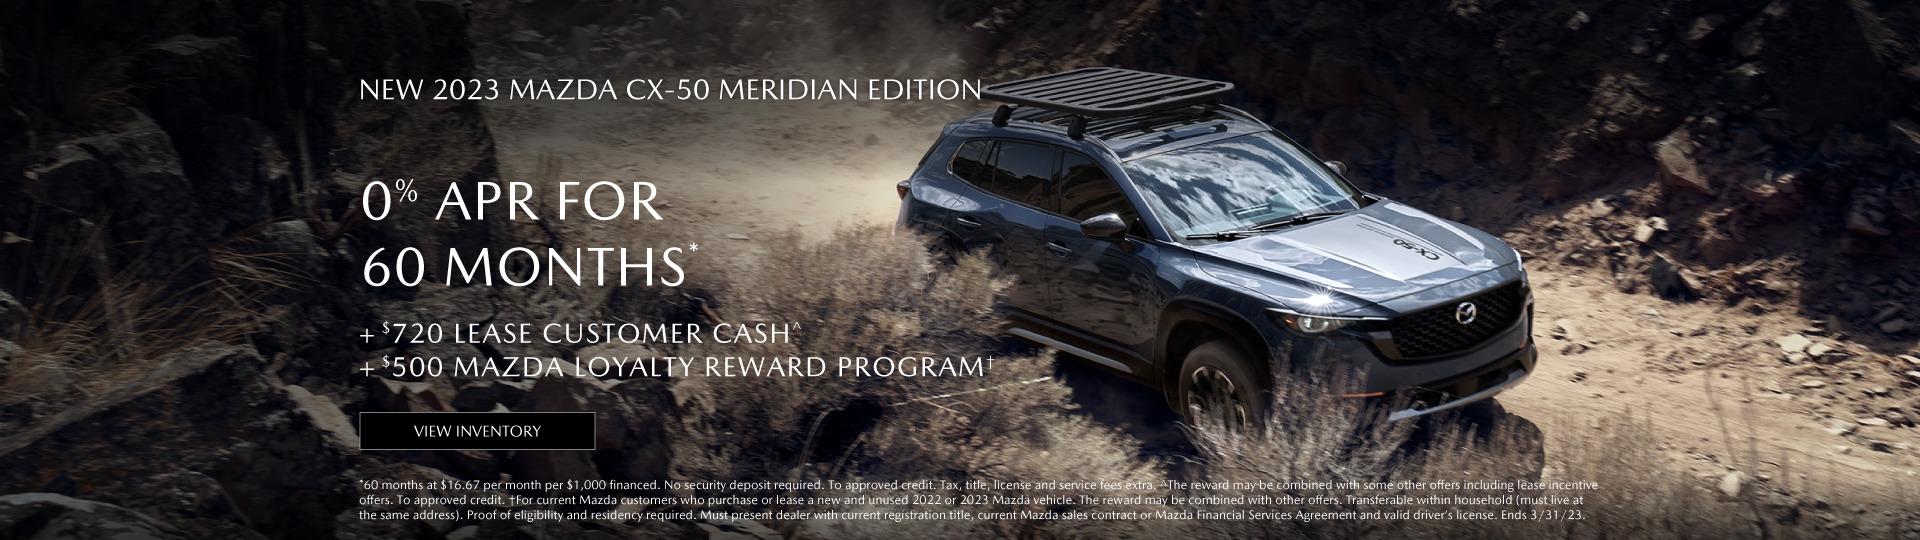 2023 Mazda  CX-50 Turbo Meridian 0% APR for 60 months + $500 Mazda Loyalty Rewards program + $720 Lease customer Cash